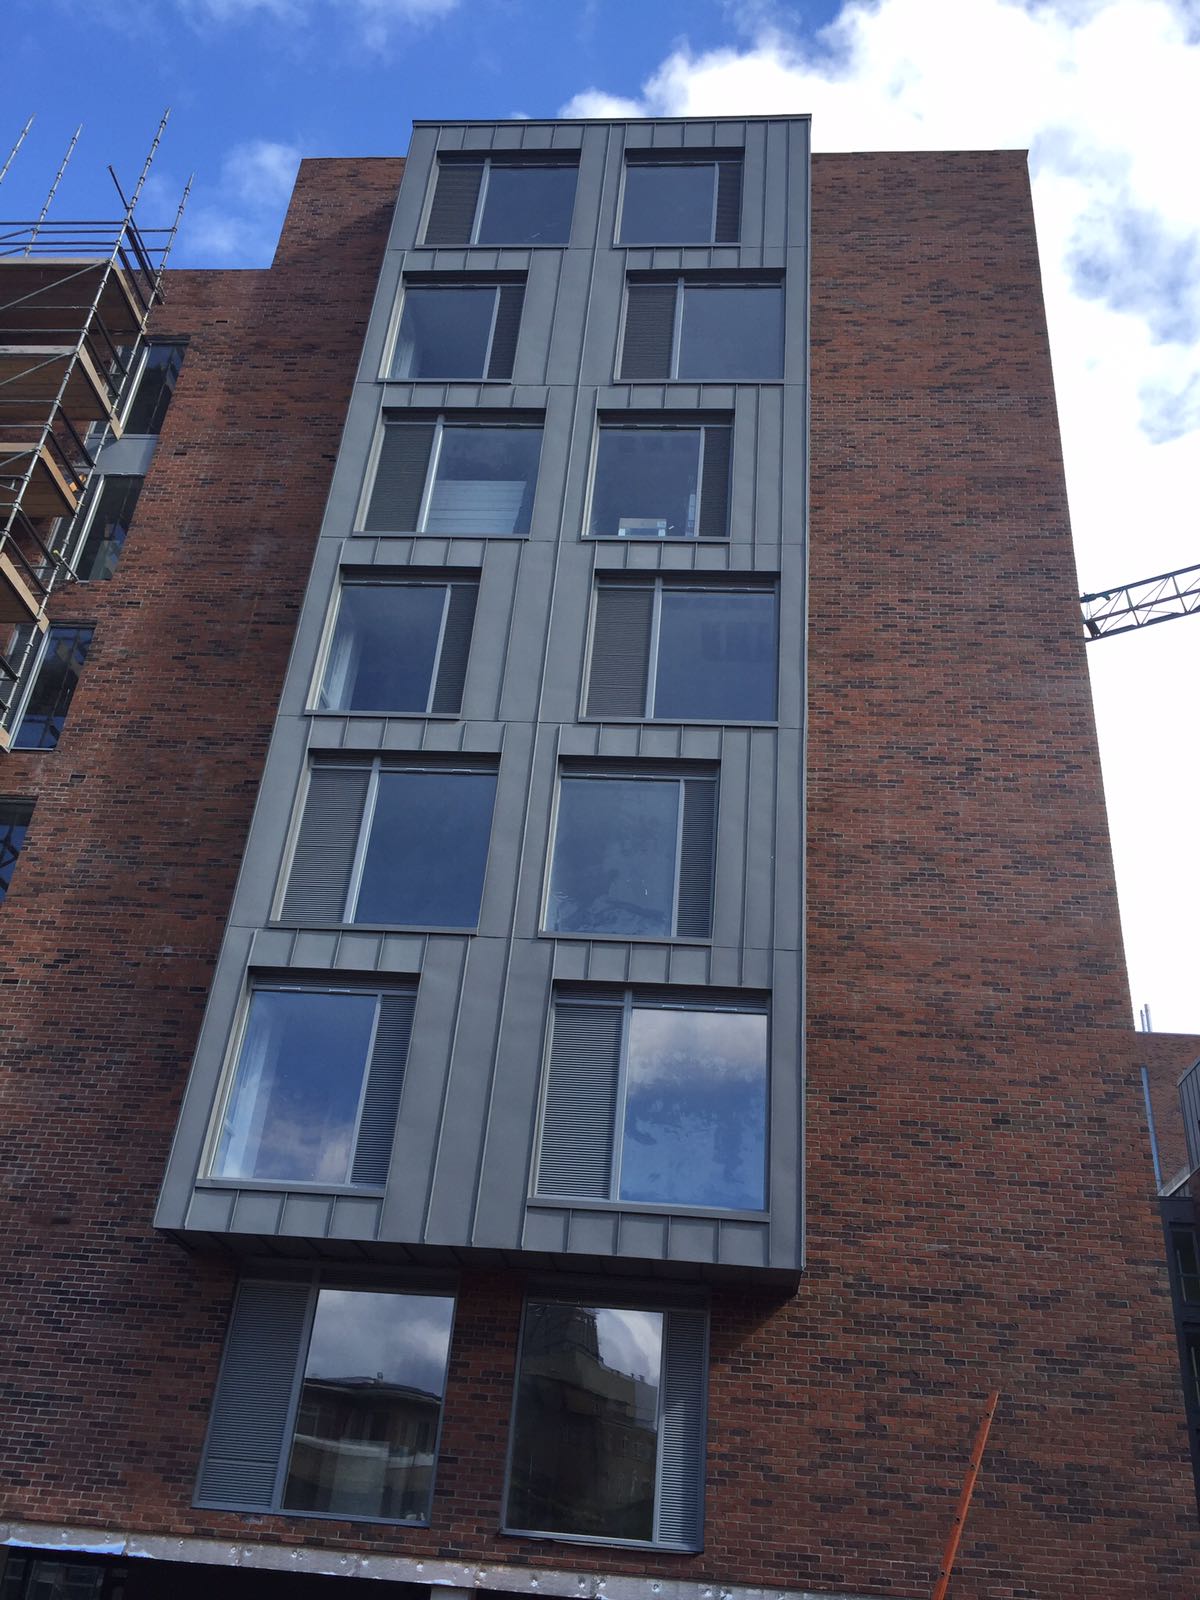 Student Accommodation Dublin - Zinc Bay Windows